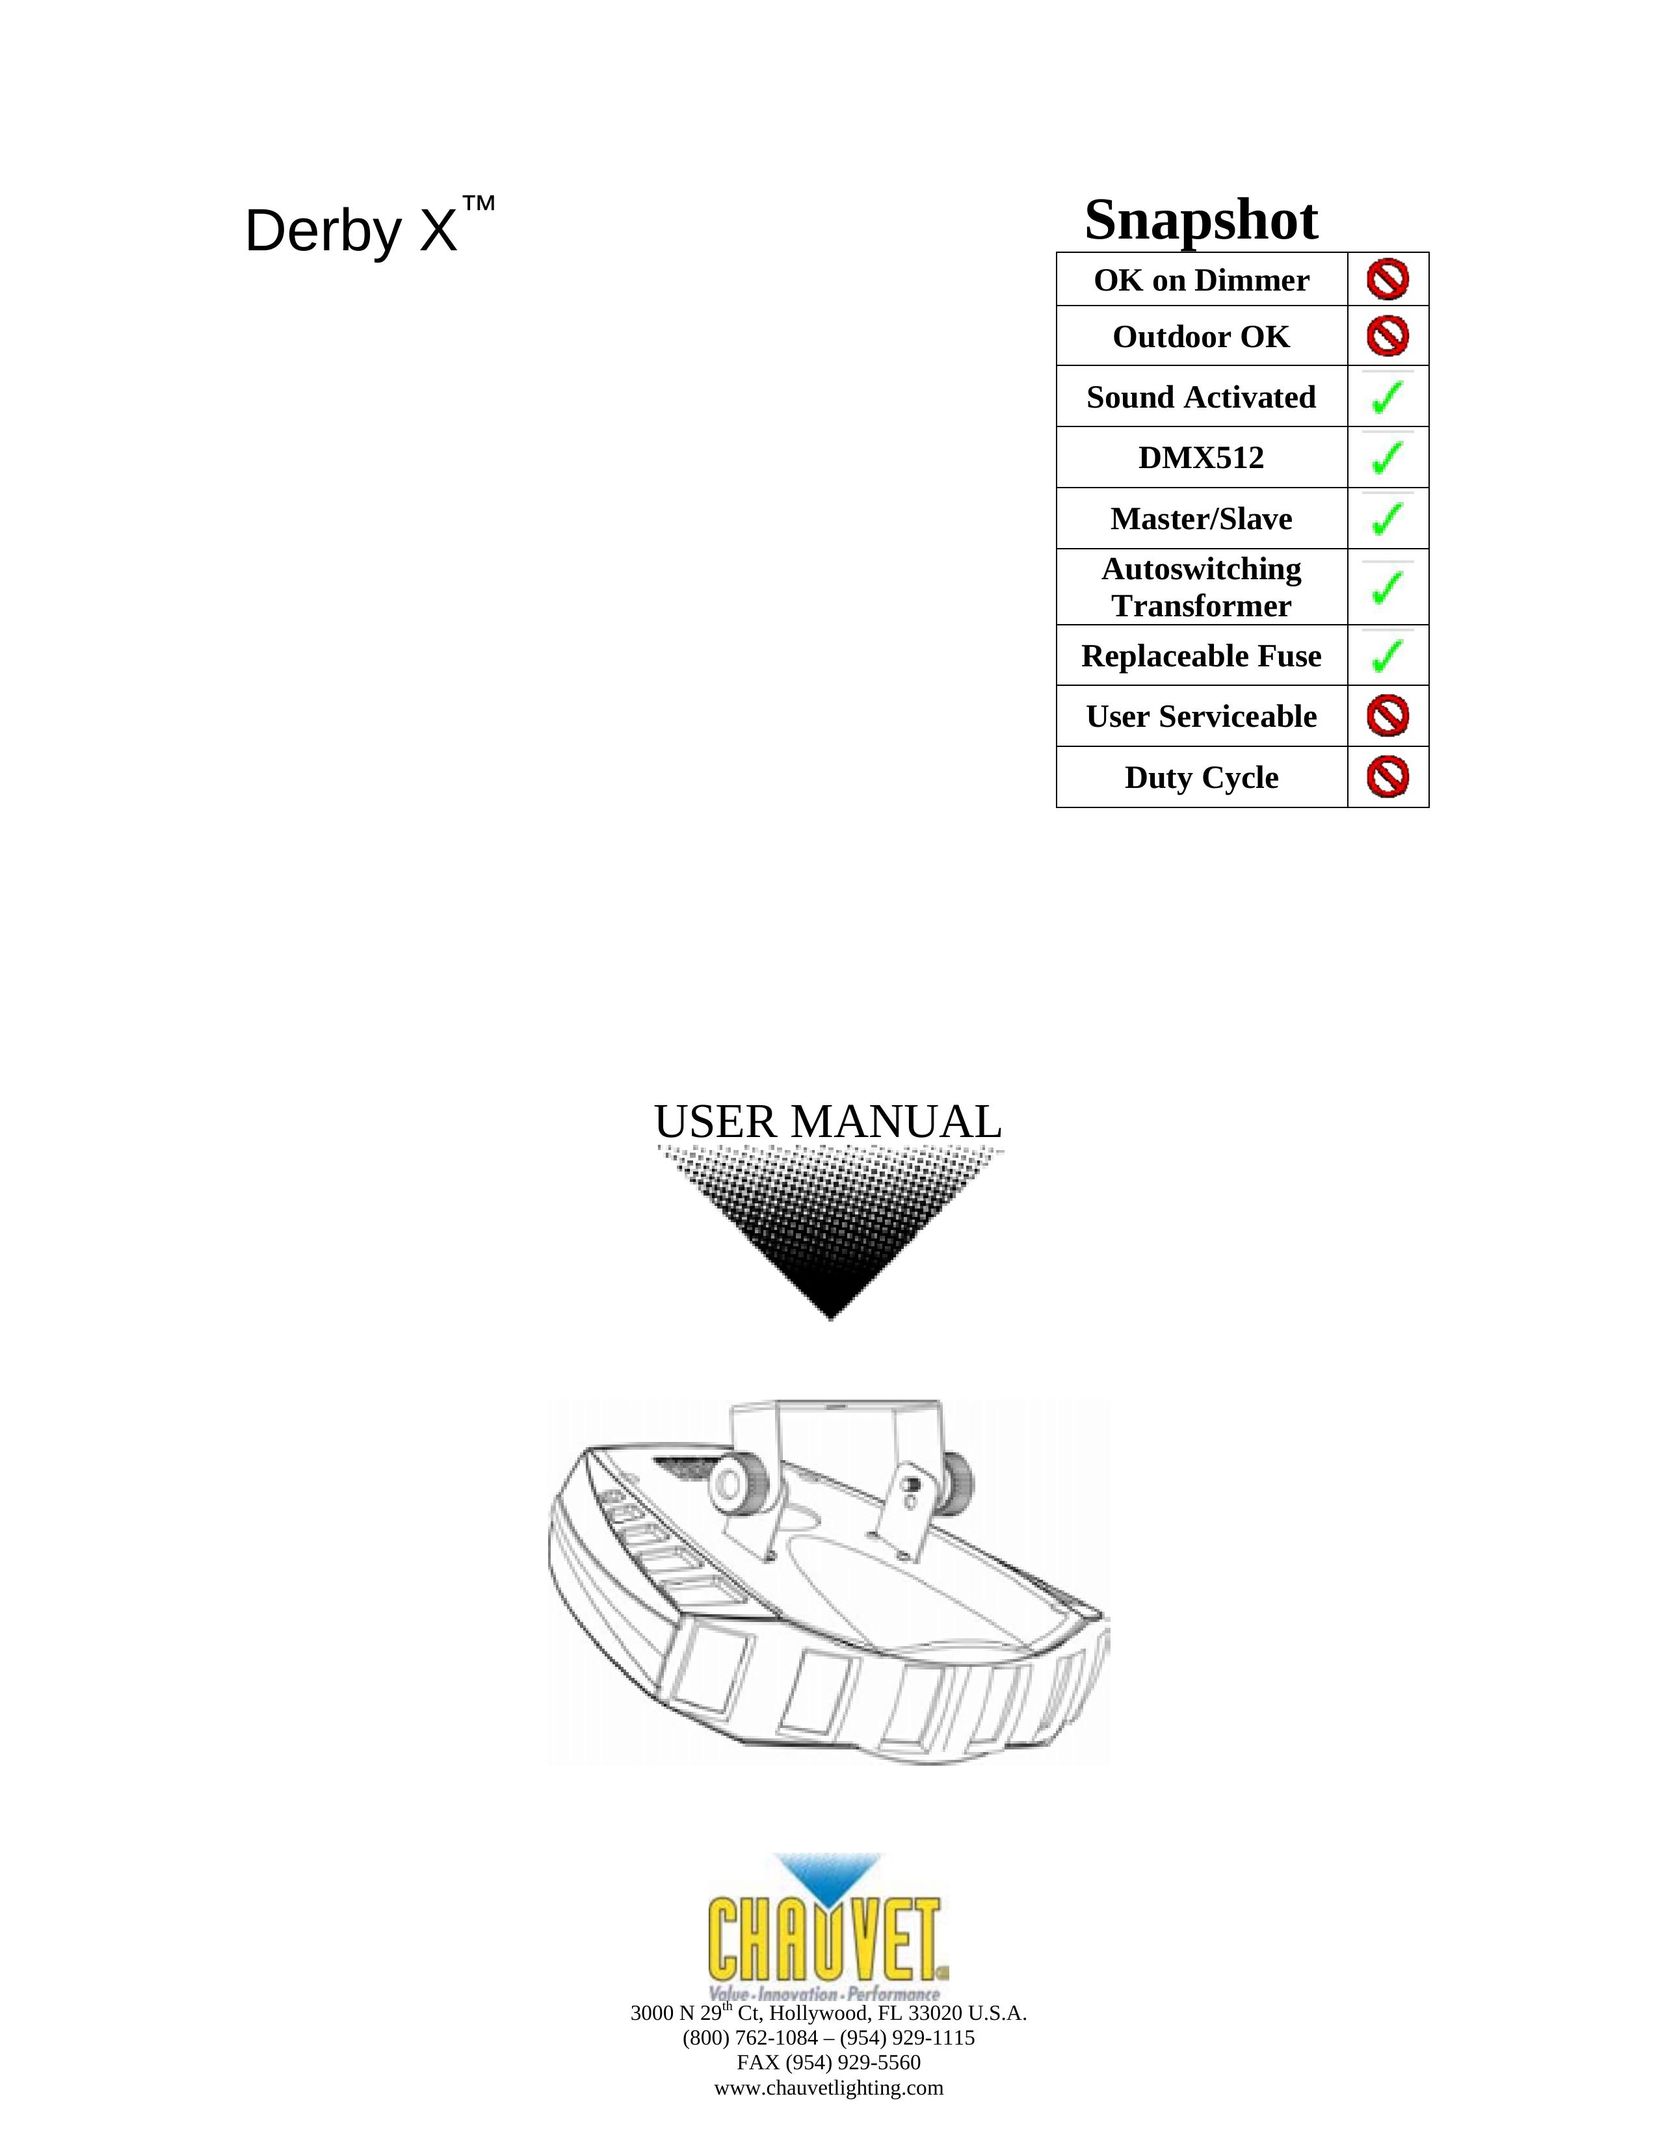 Chauvet DERBY X Welding System User Manual